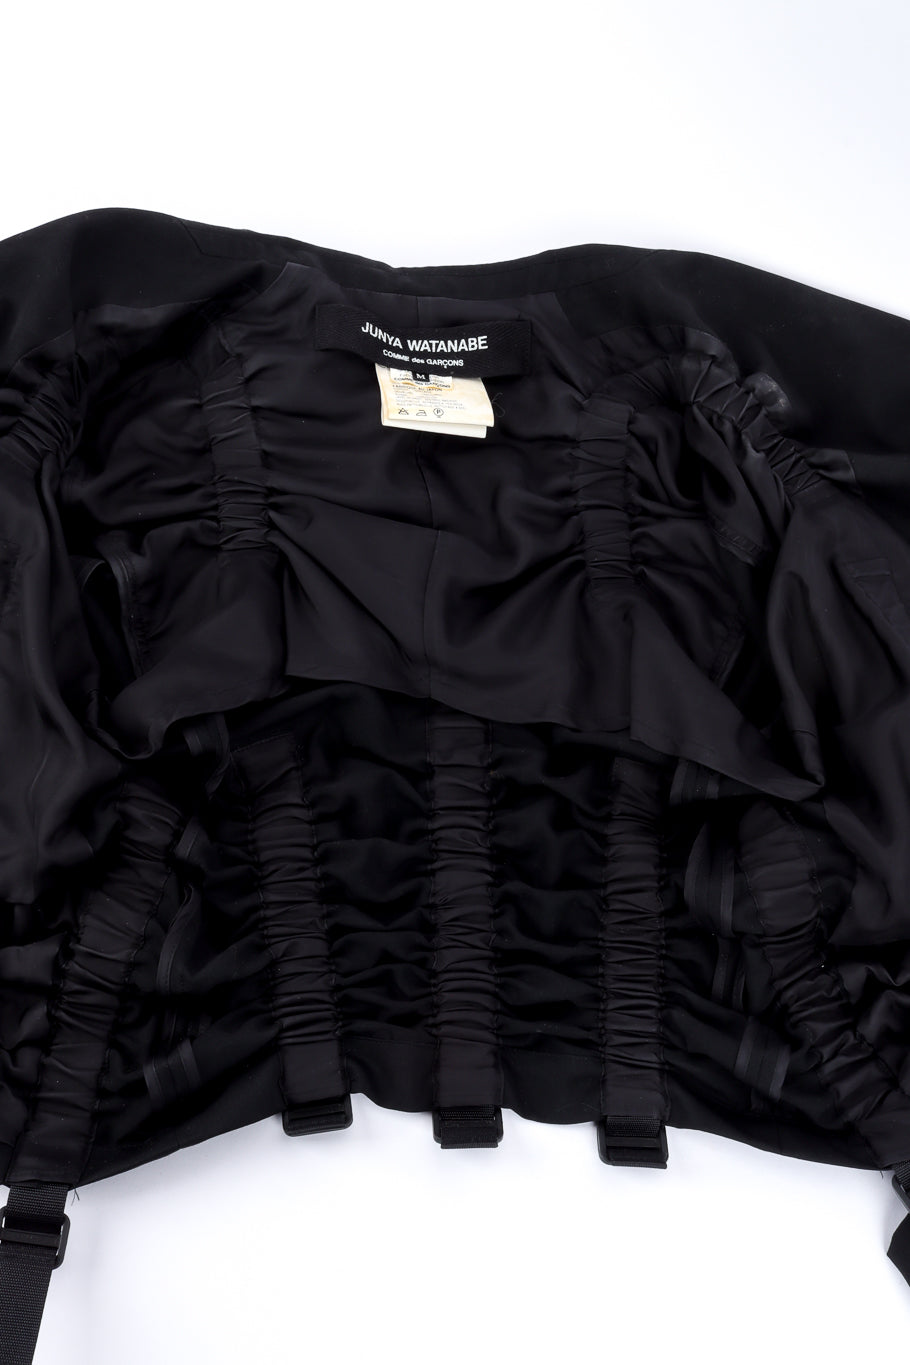 Junya Watanabe 2003 S/S Parachute Harness Jacket view of lining @recessla